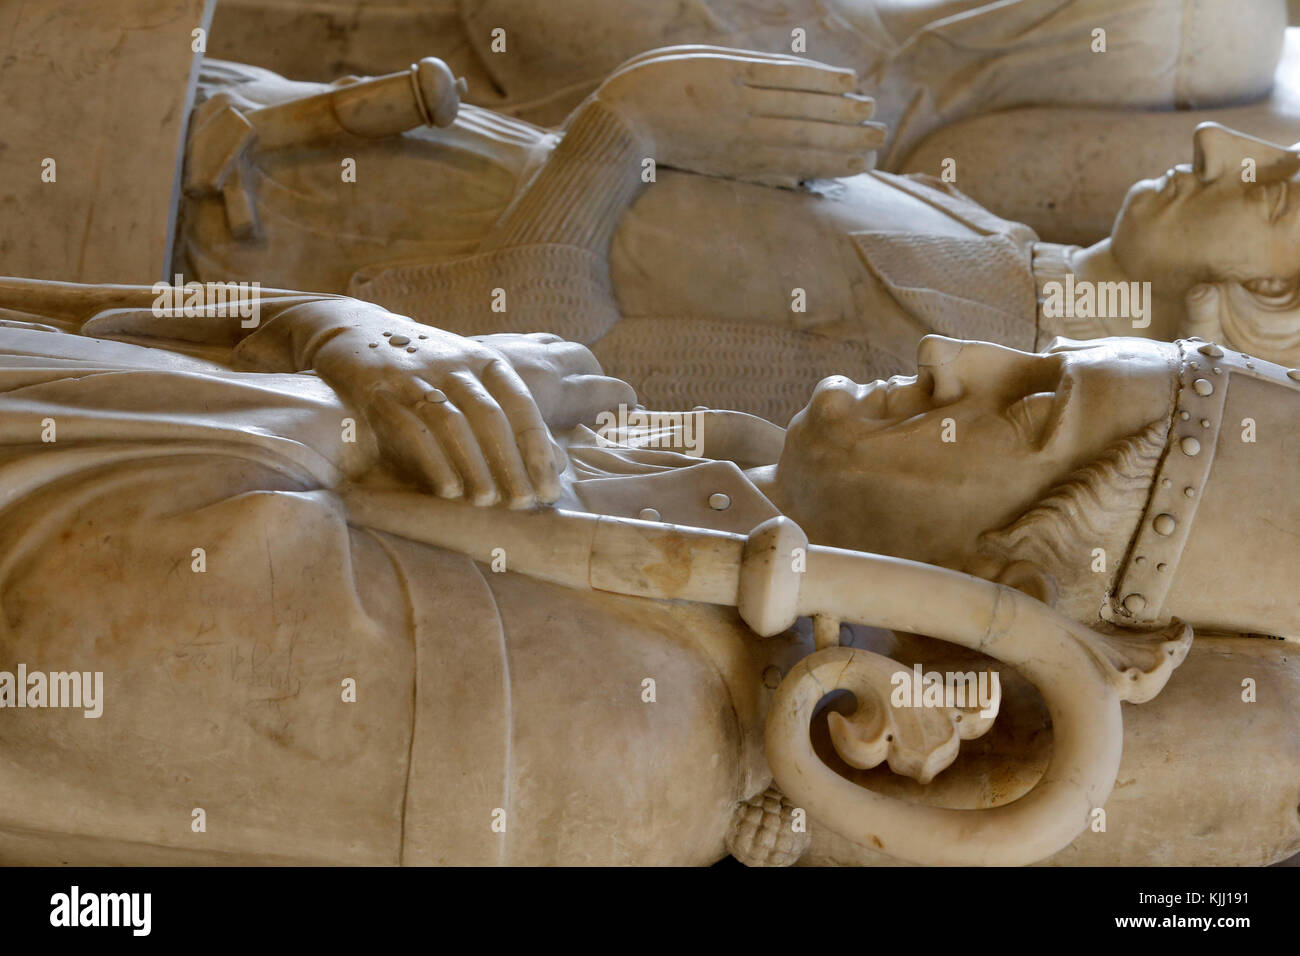 Louvre Museum. Liegende Figur von Guillaume de Chanac, Bischof von Paris. Marmor. Ile-de-France, 14. Frankreich. Stockfoto